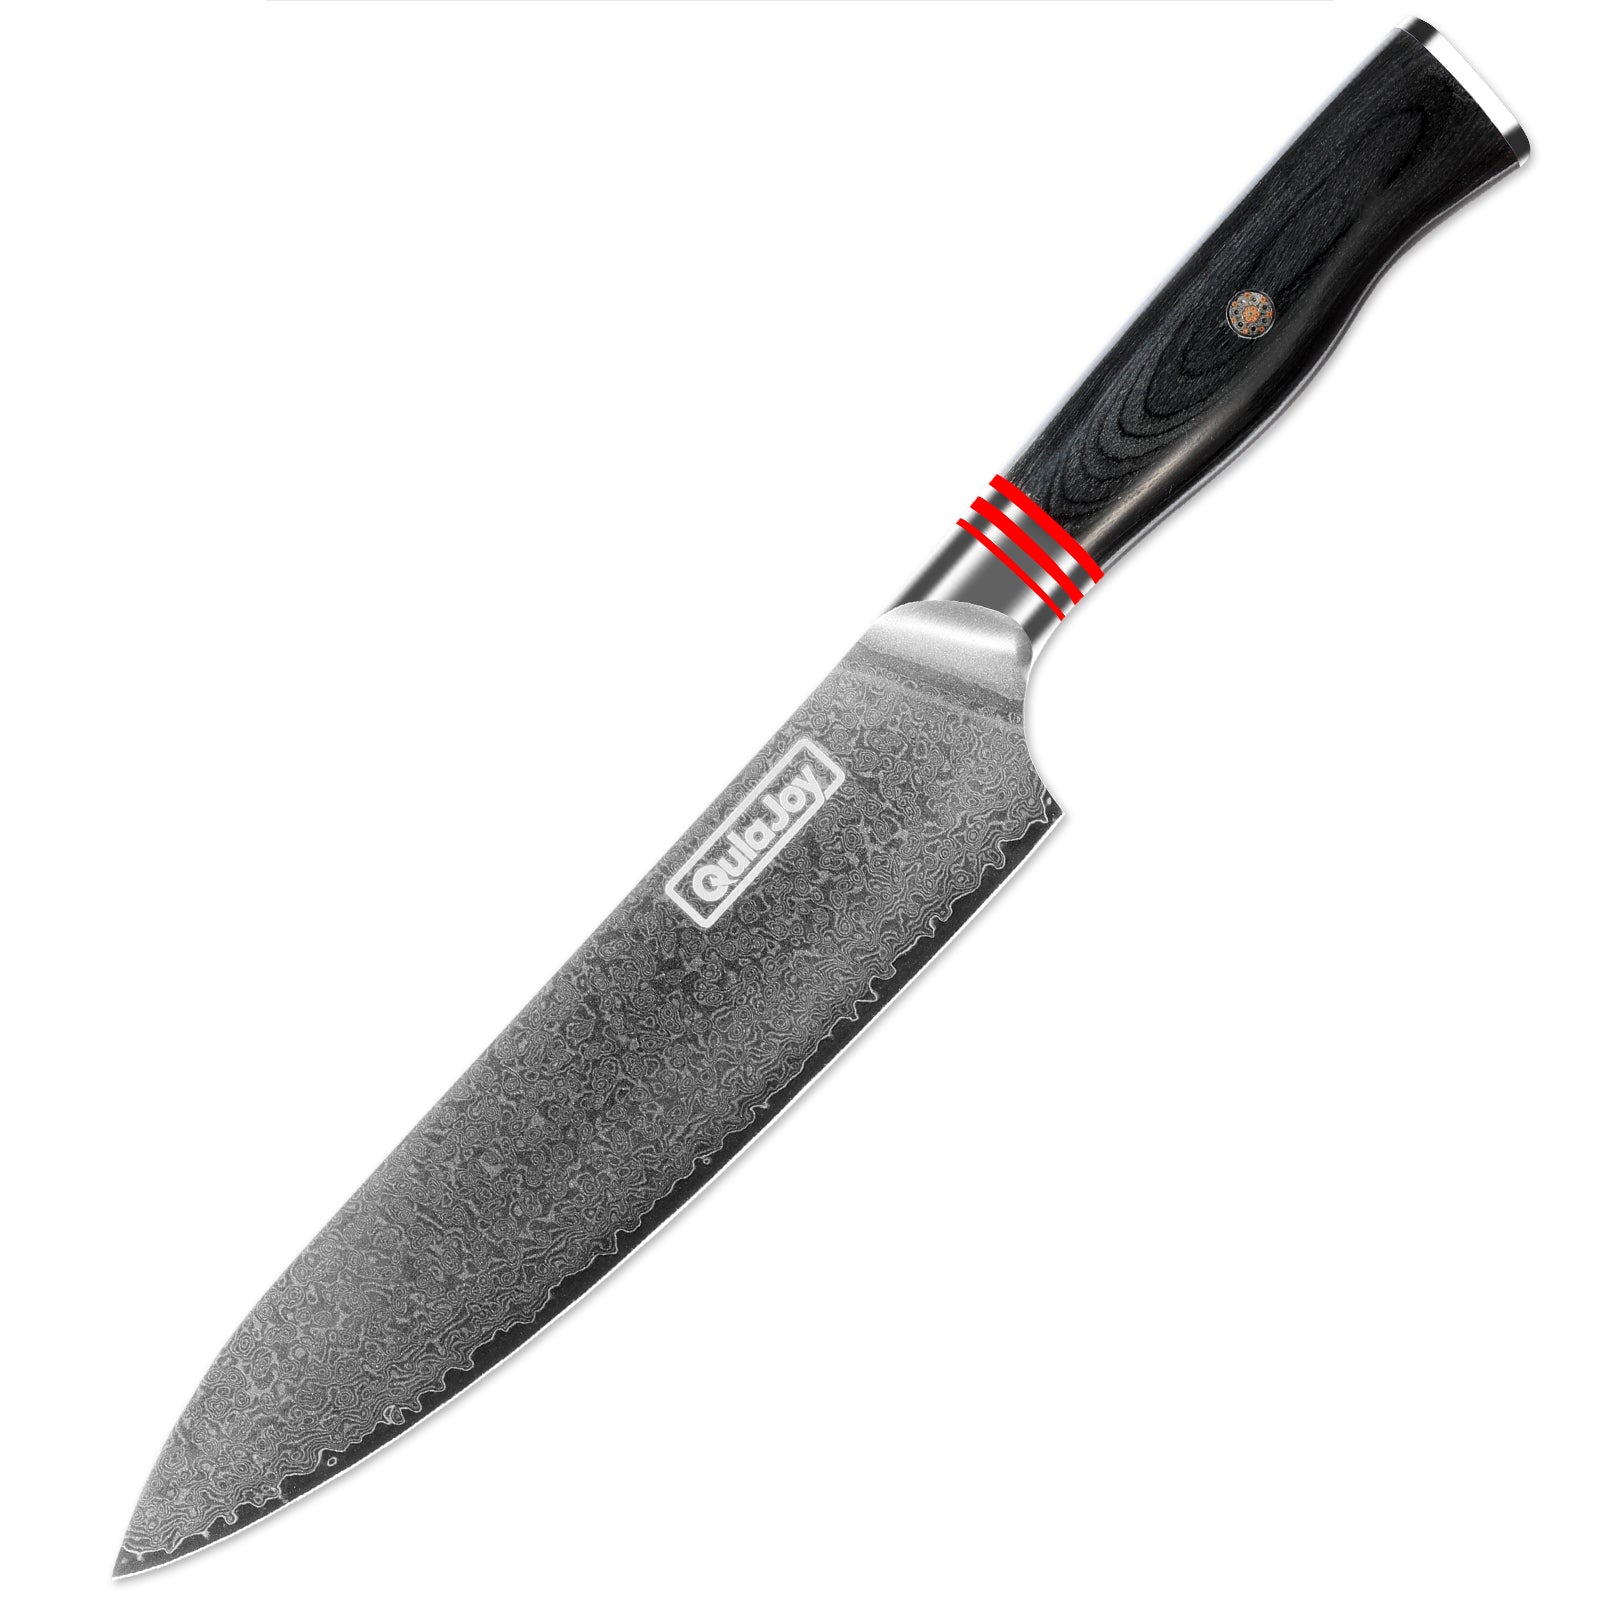 Japanese Damascus 8 Inch Kitchen Knife w/Ergonomic Handle by Qu LaJoy